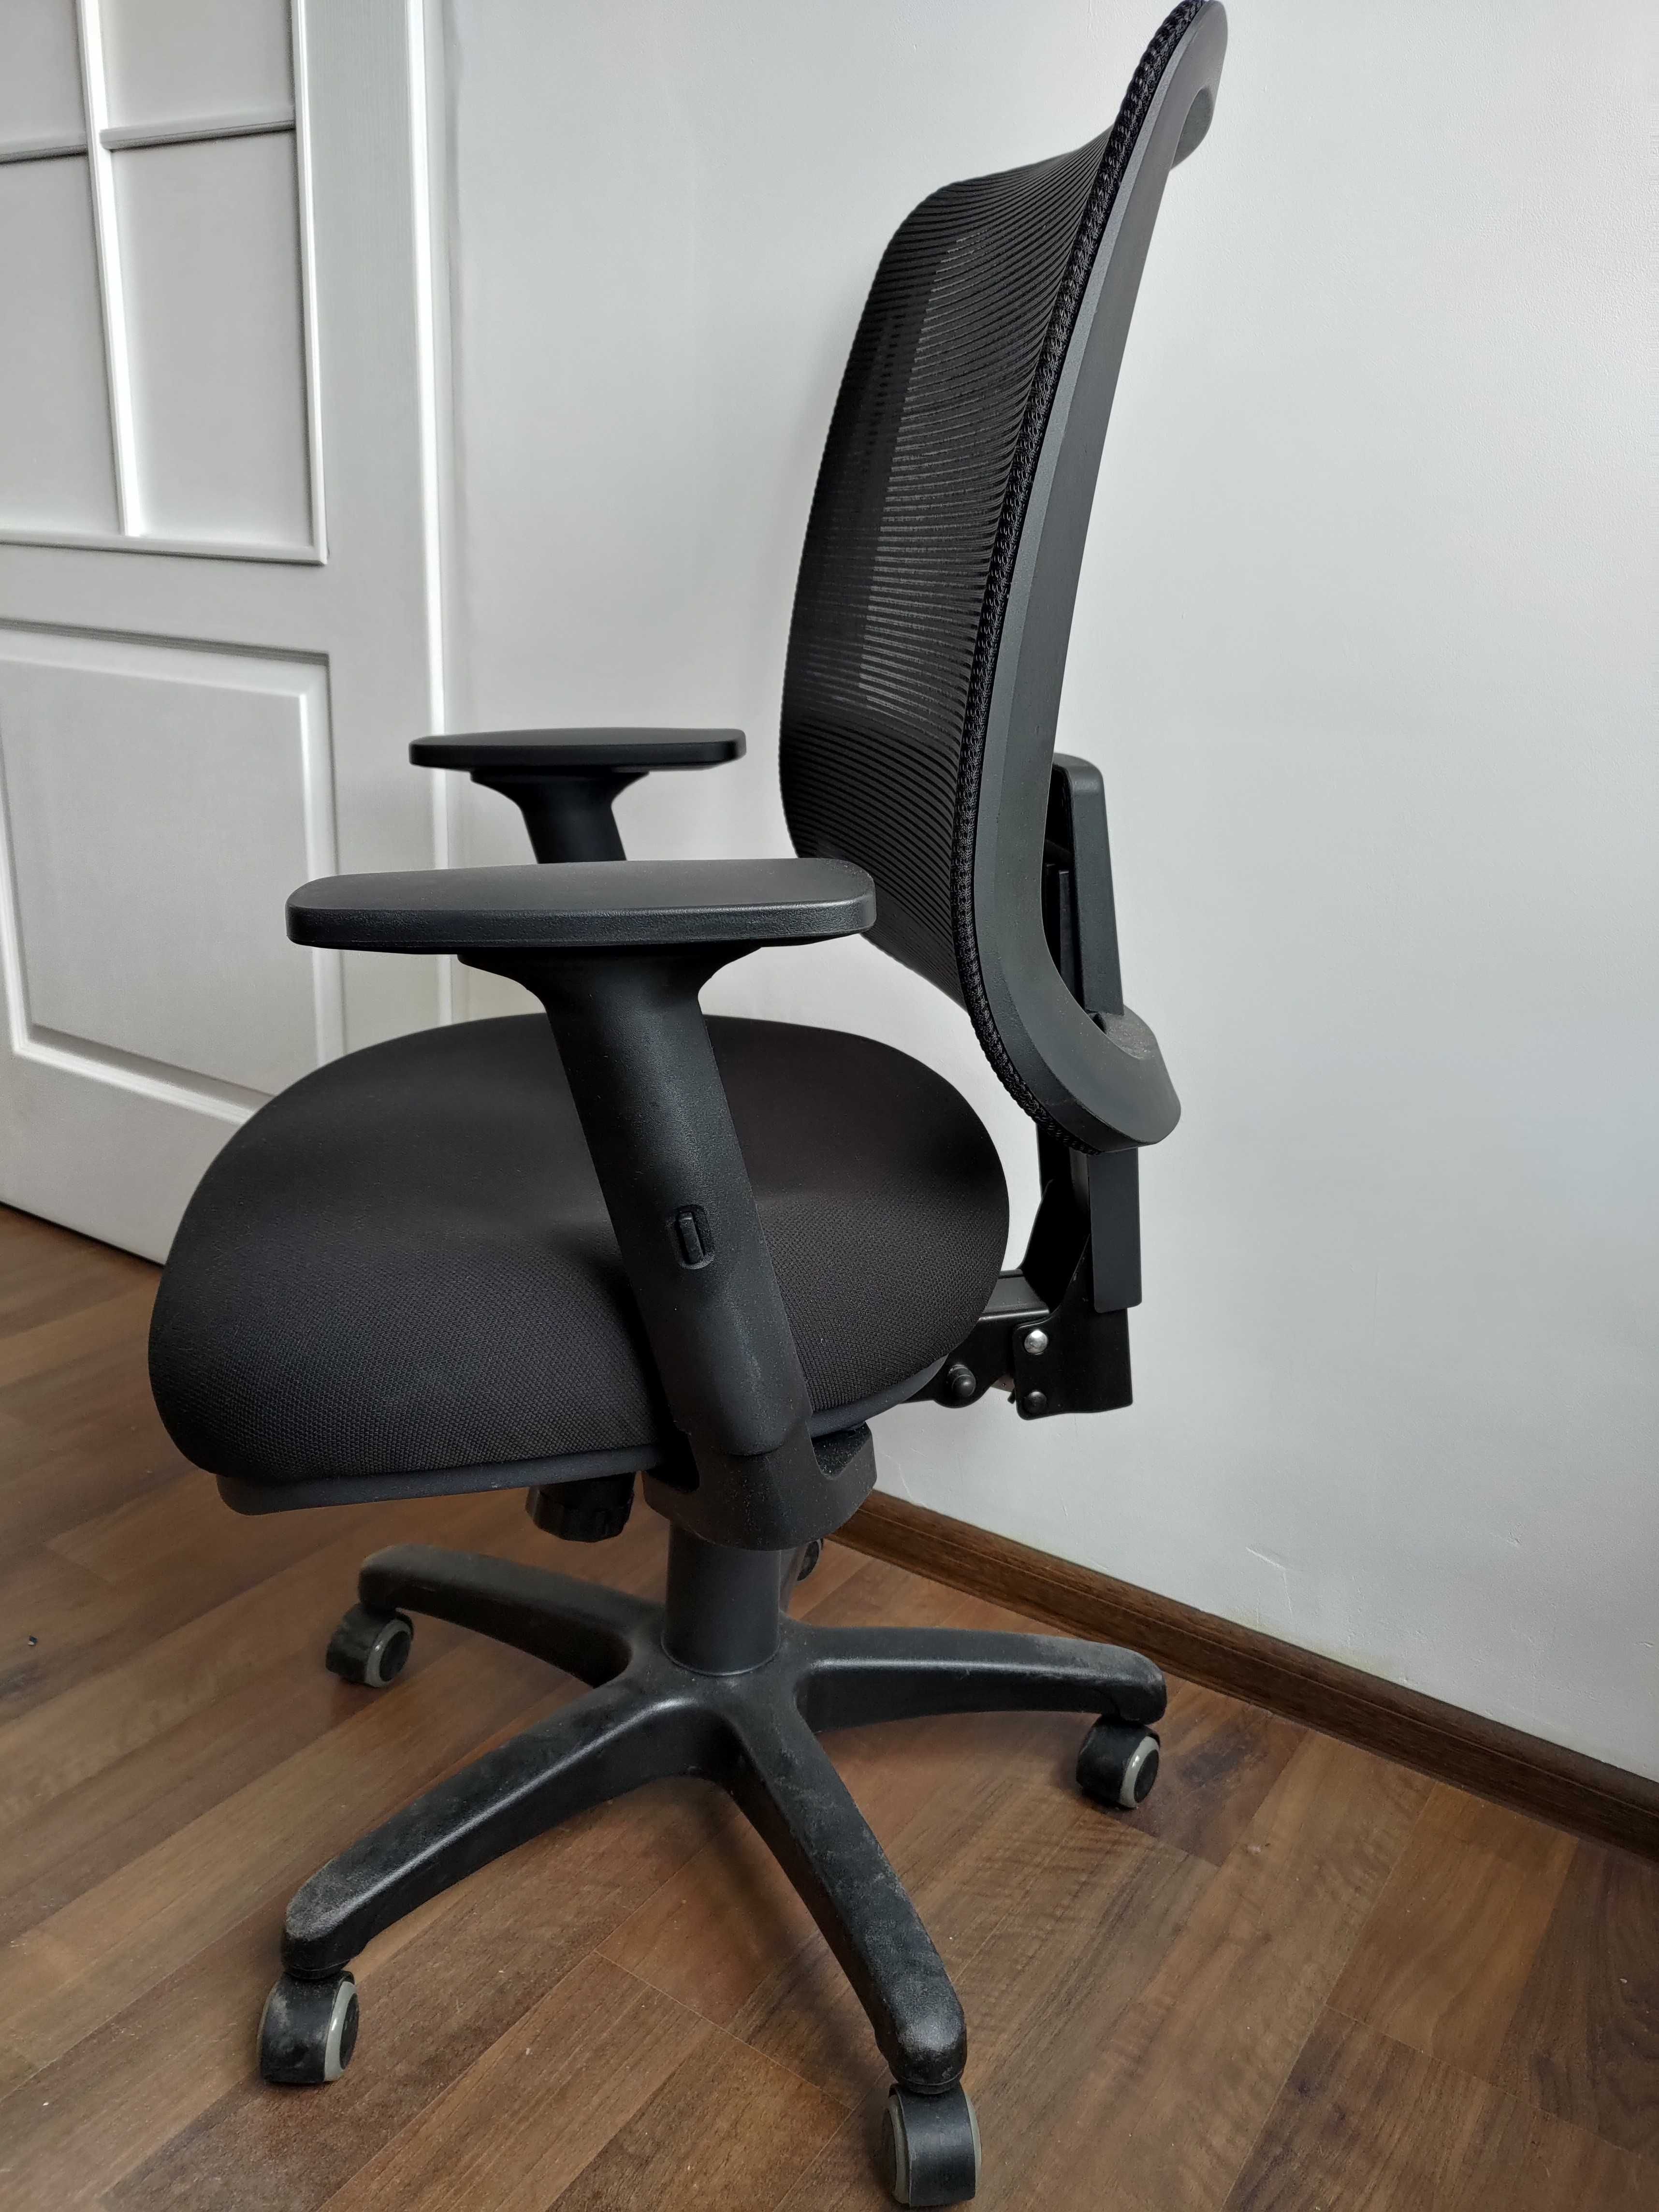 fotel ergonomiczny saga plus unique do biura jak nowy faktura vat